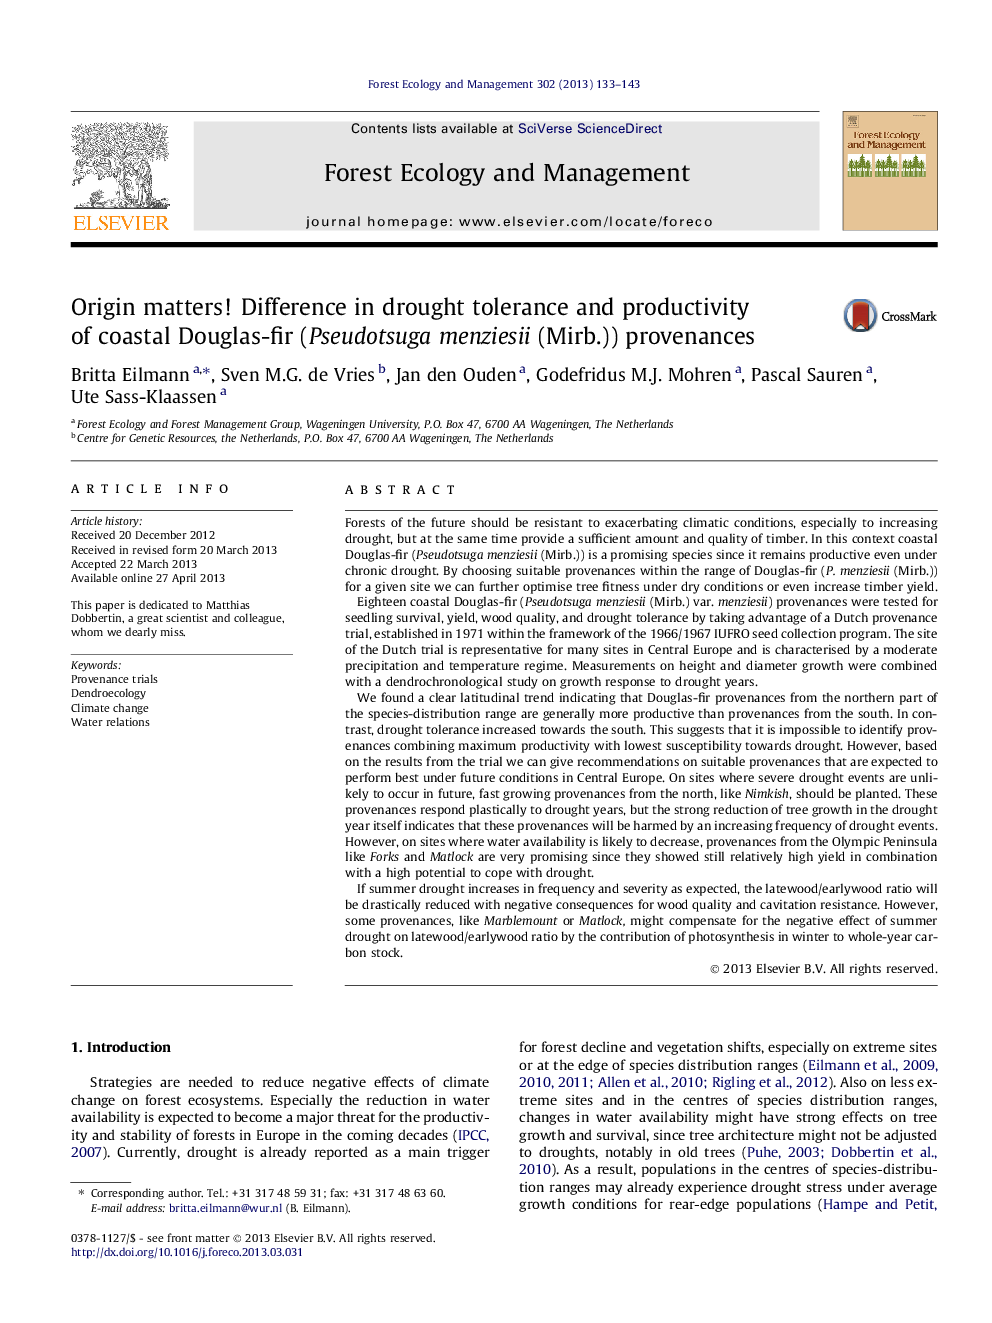 Origin matters! Difference in drought tolerance and productivity of coastal Douglas-fir (Pseudotsuga menziesii (Mirb.)) provenances